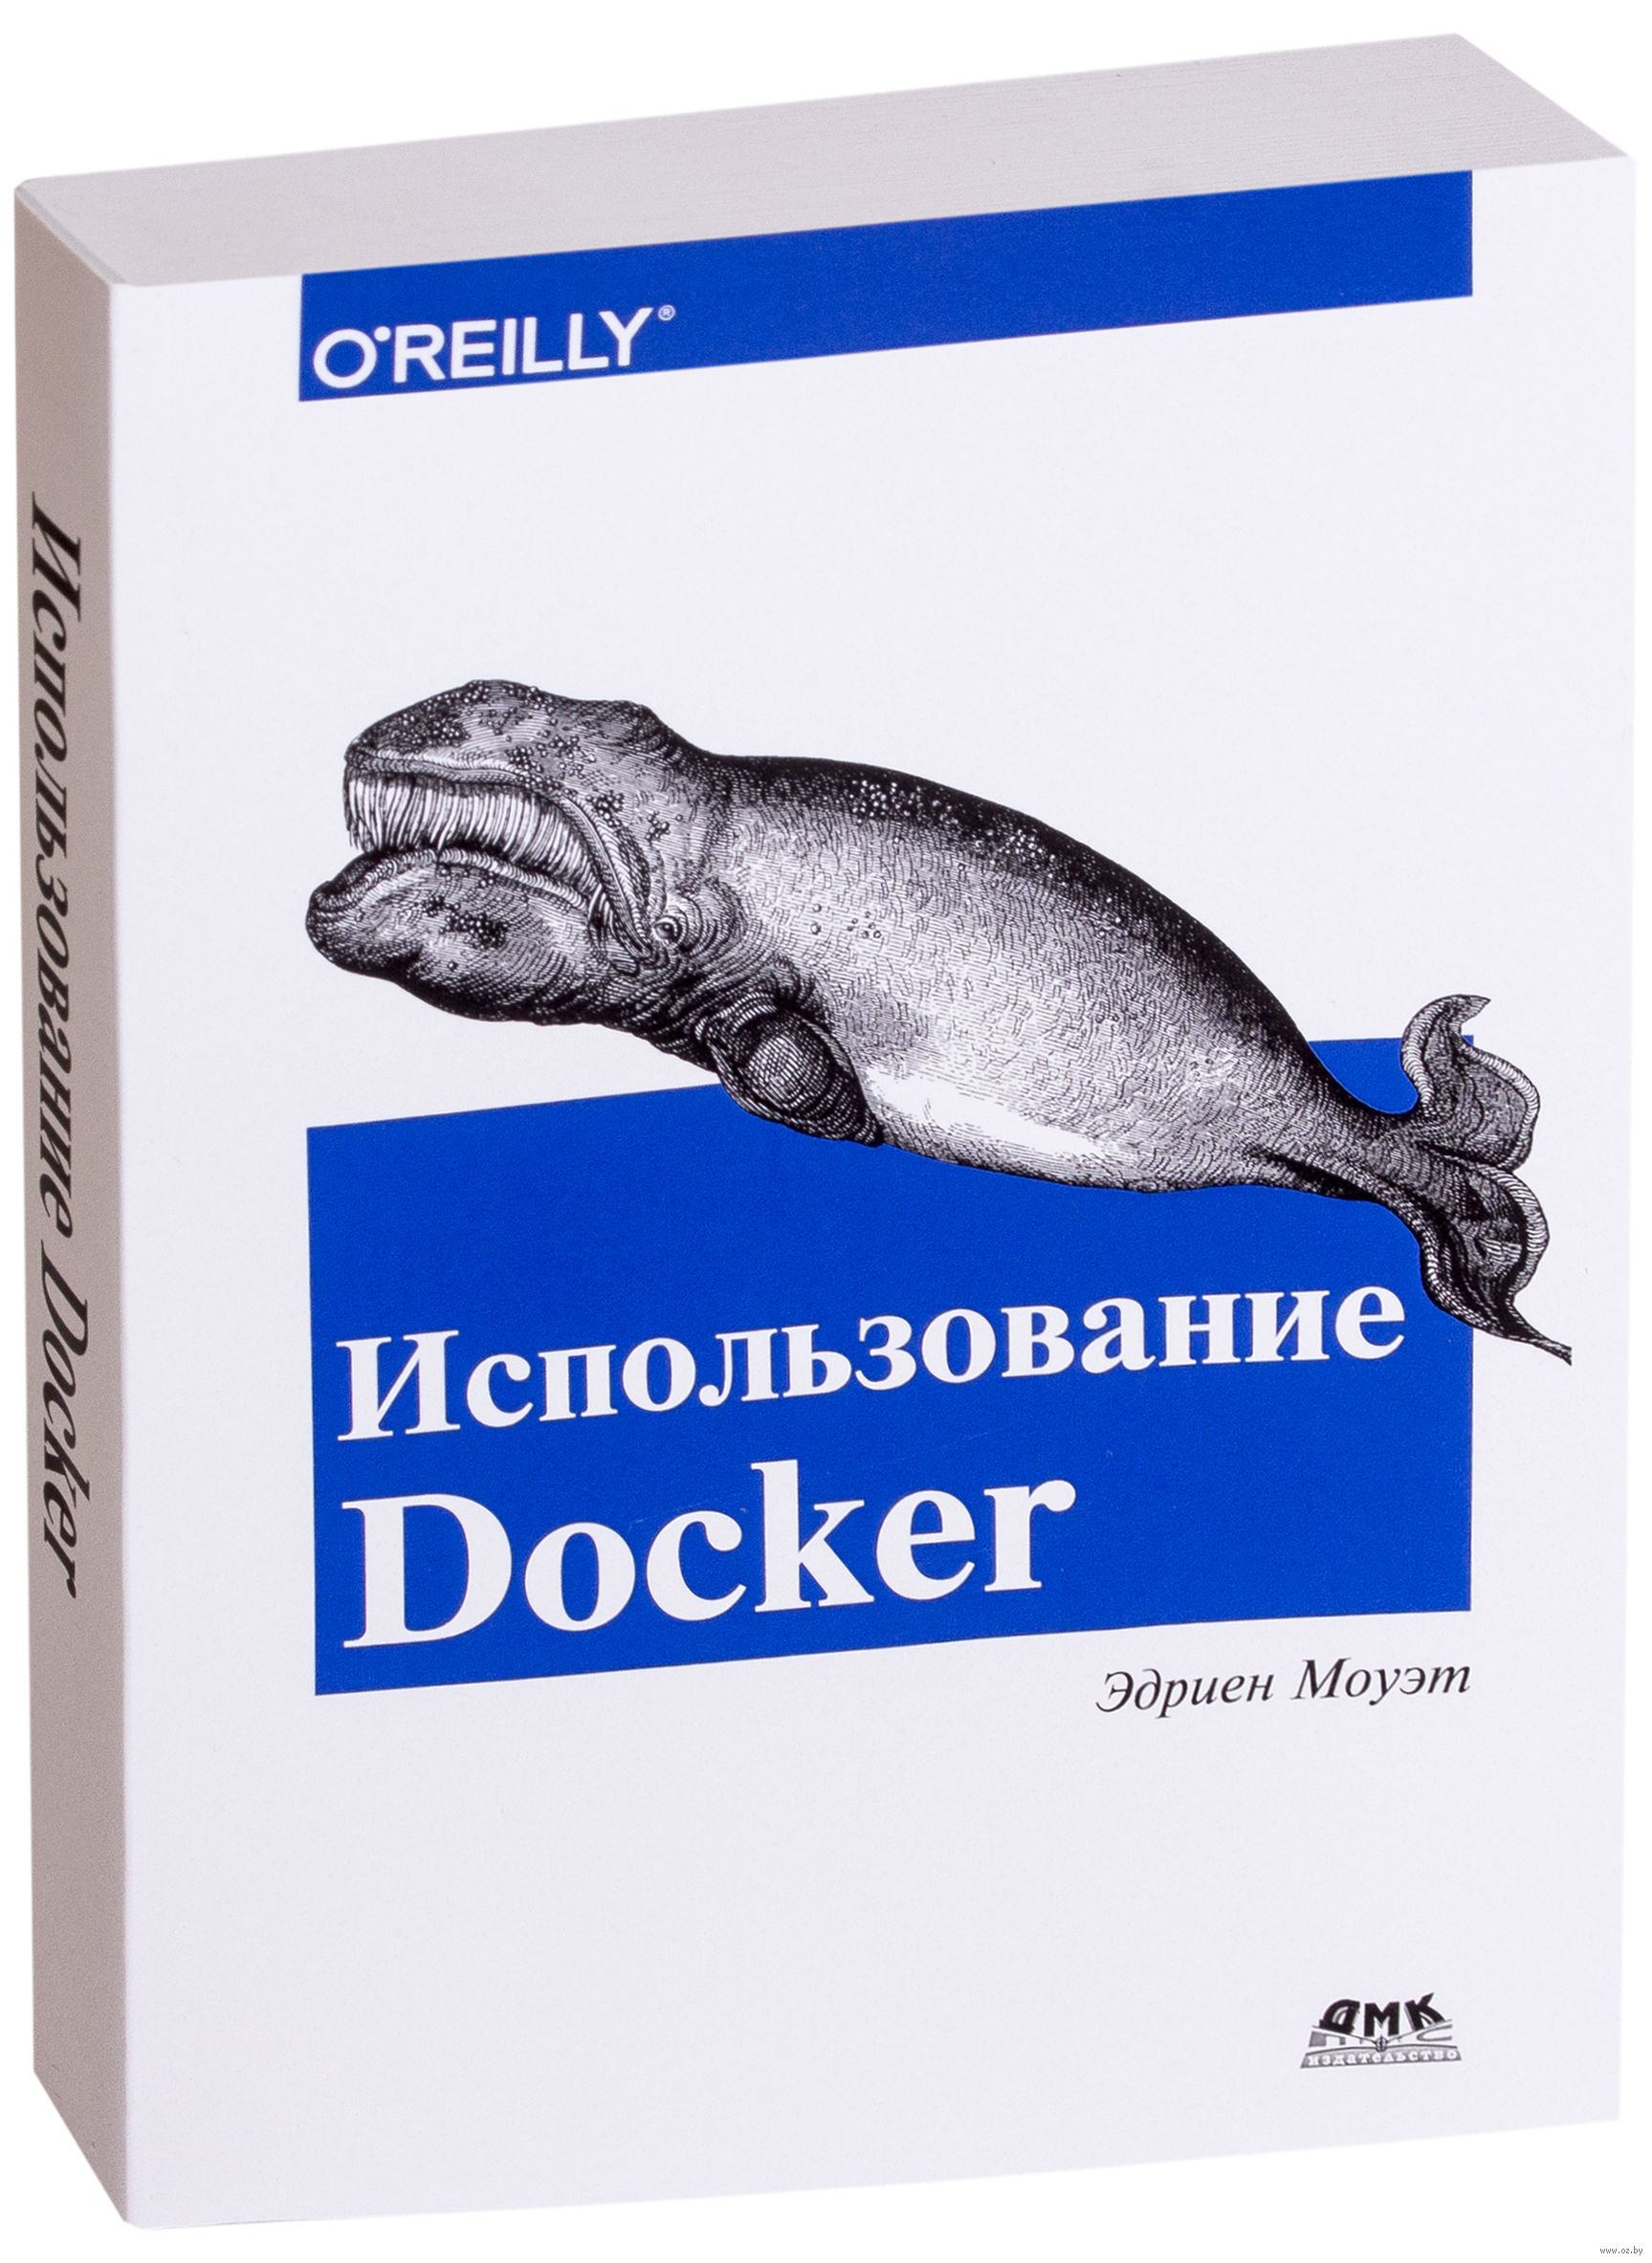  .  Docker 